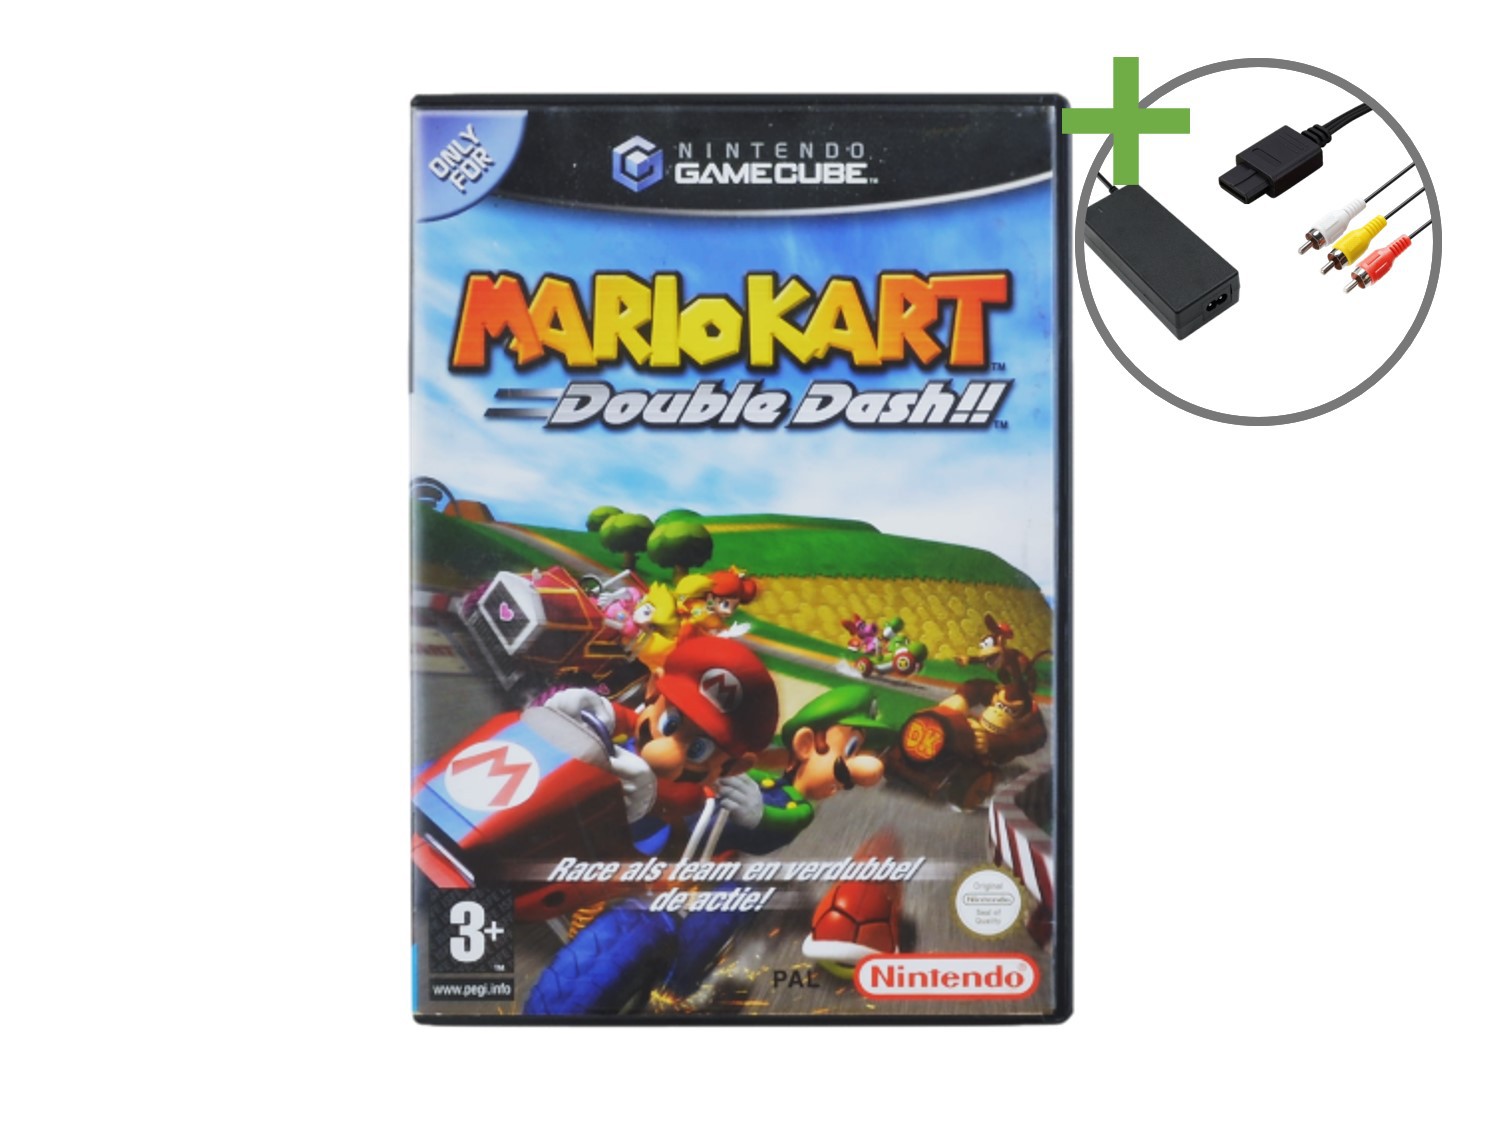 Nintendo Gamecube Starter Pack - Mario Kart Double Dash Edition - Gamecube Hardware - 4